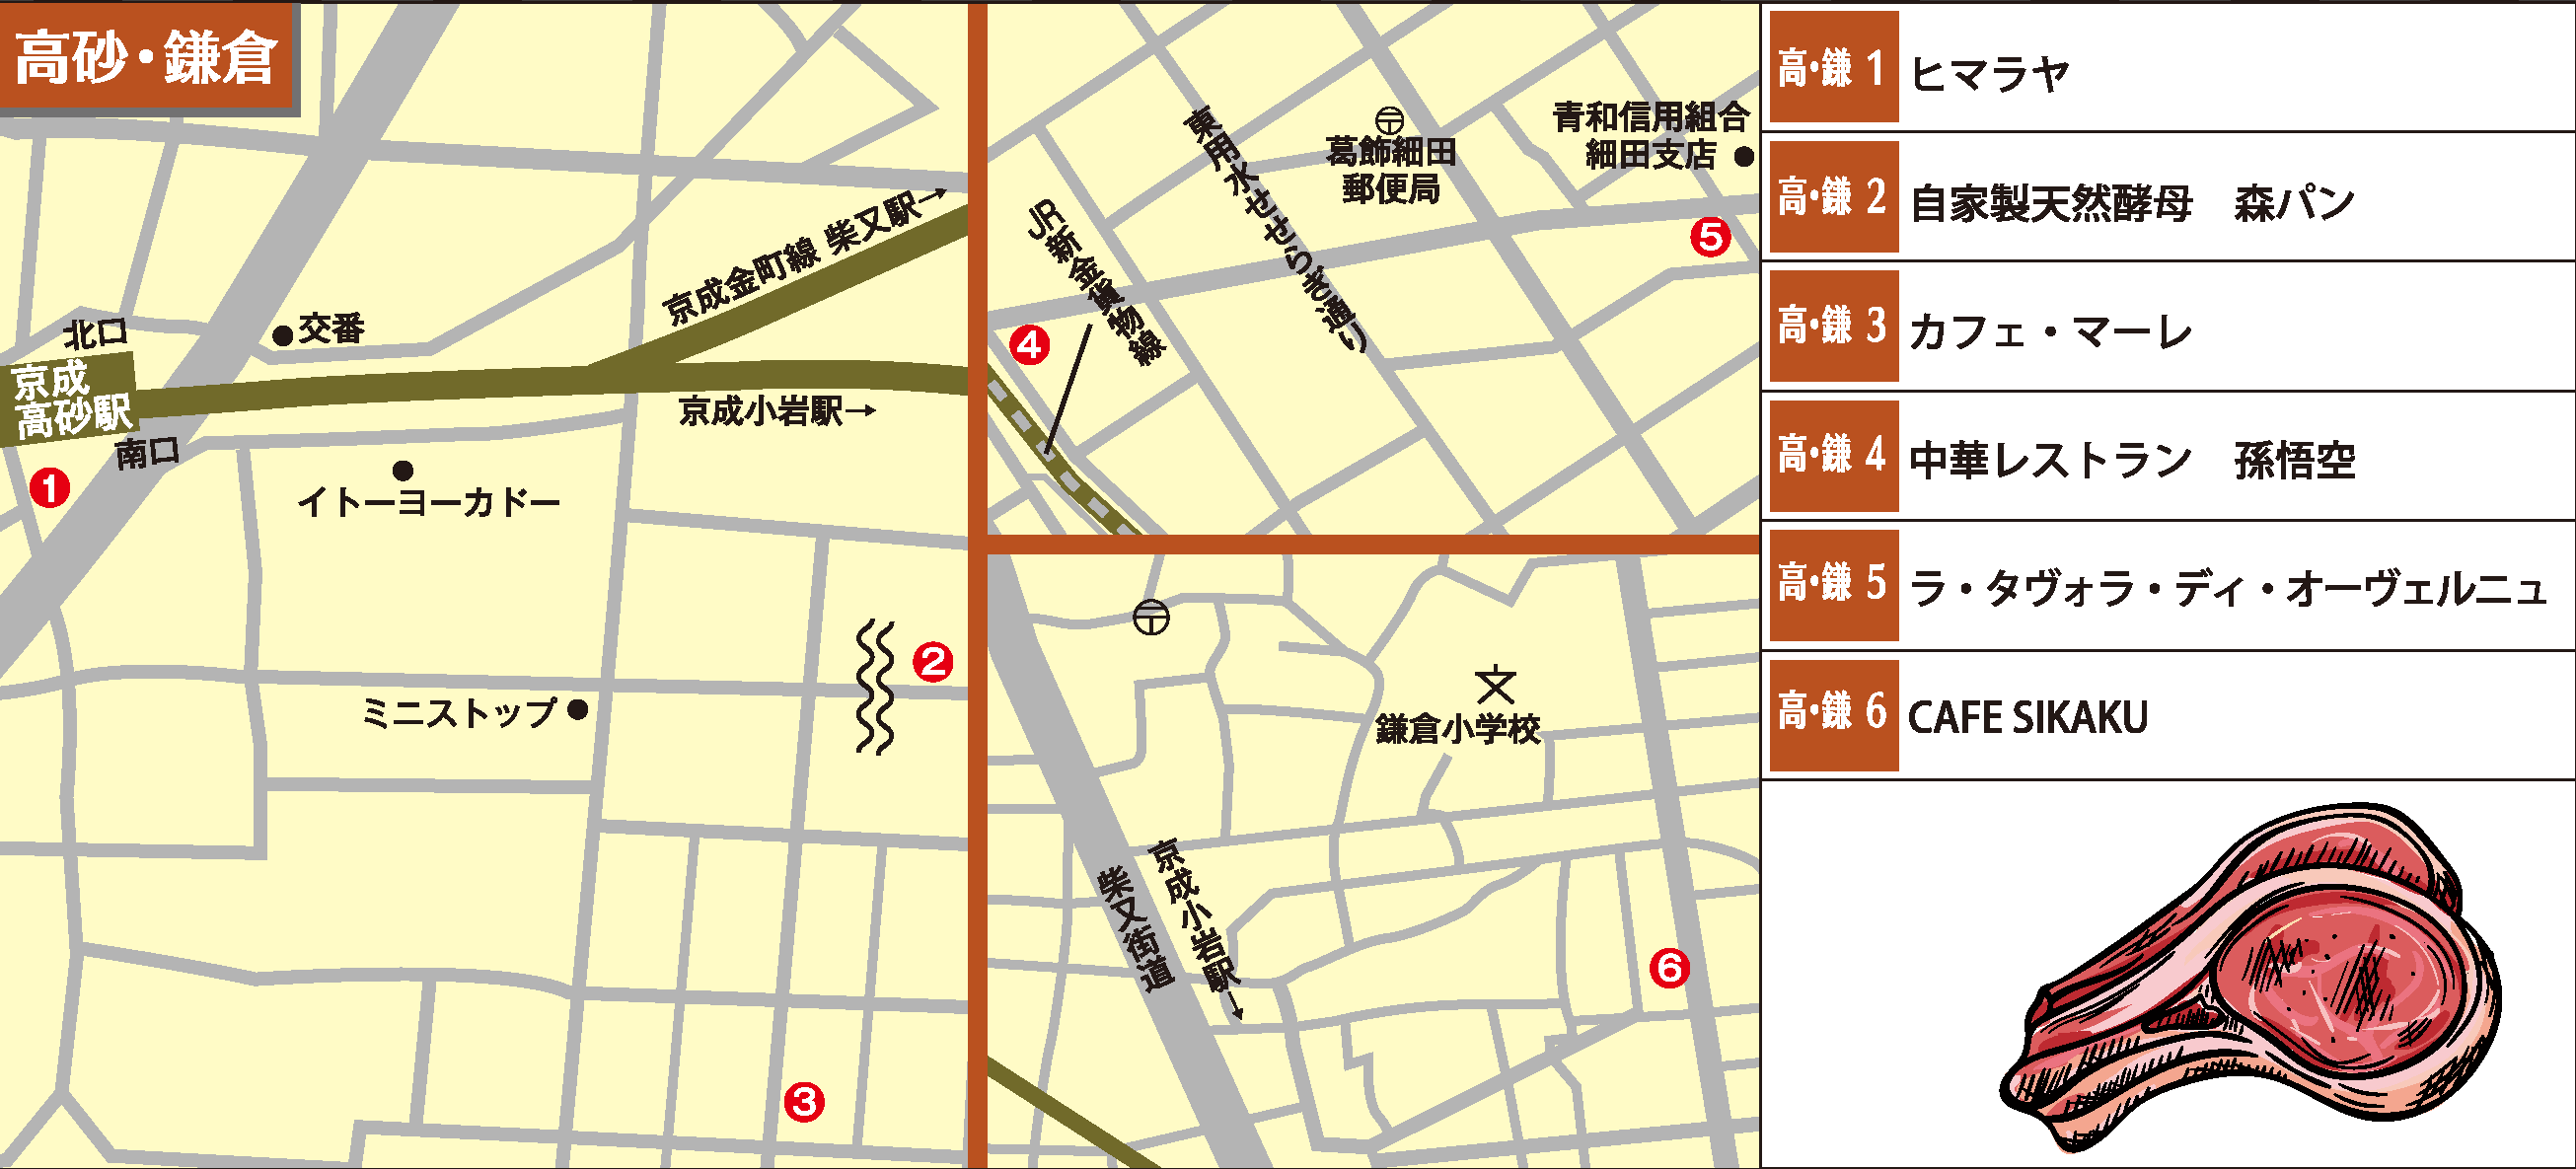 ph_nf2021_ohanatyaya-map